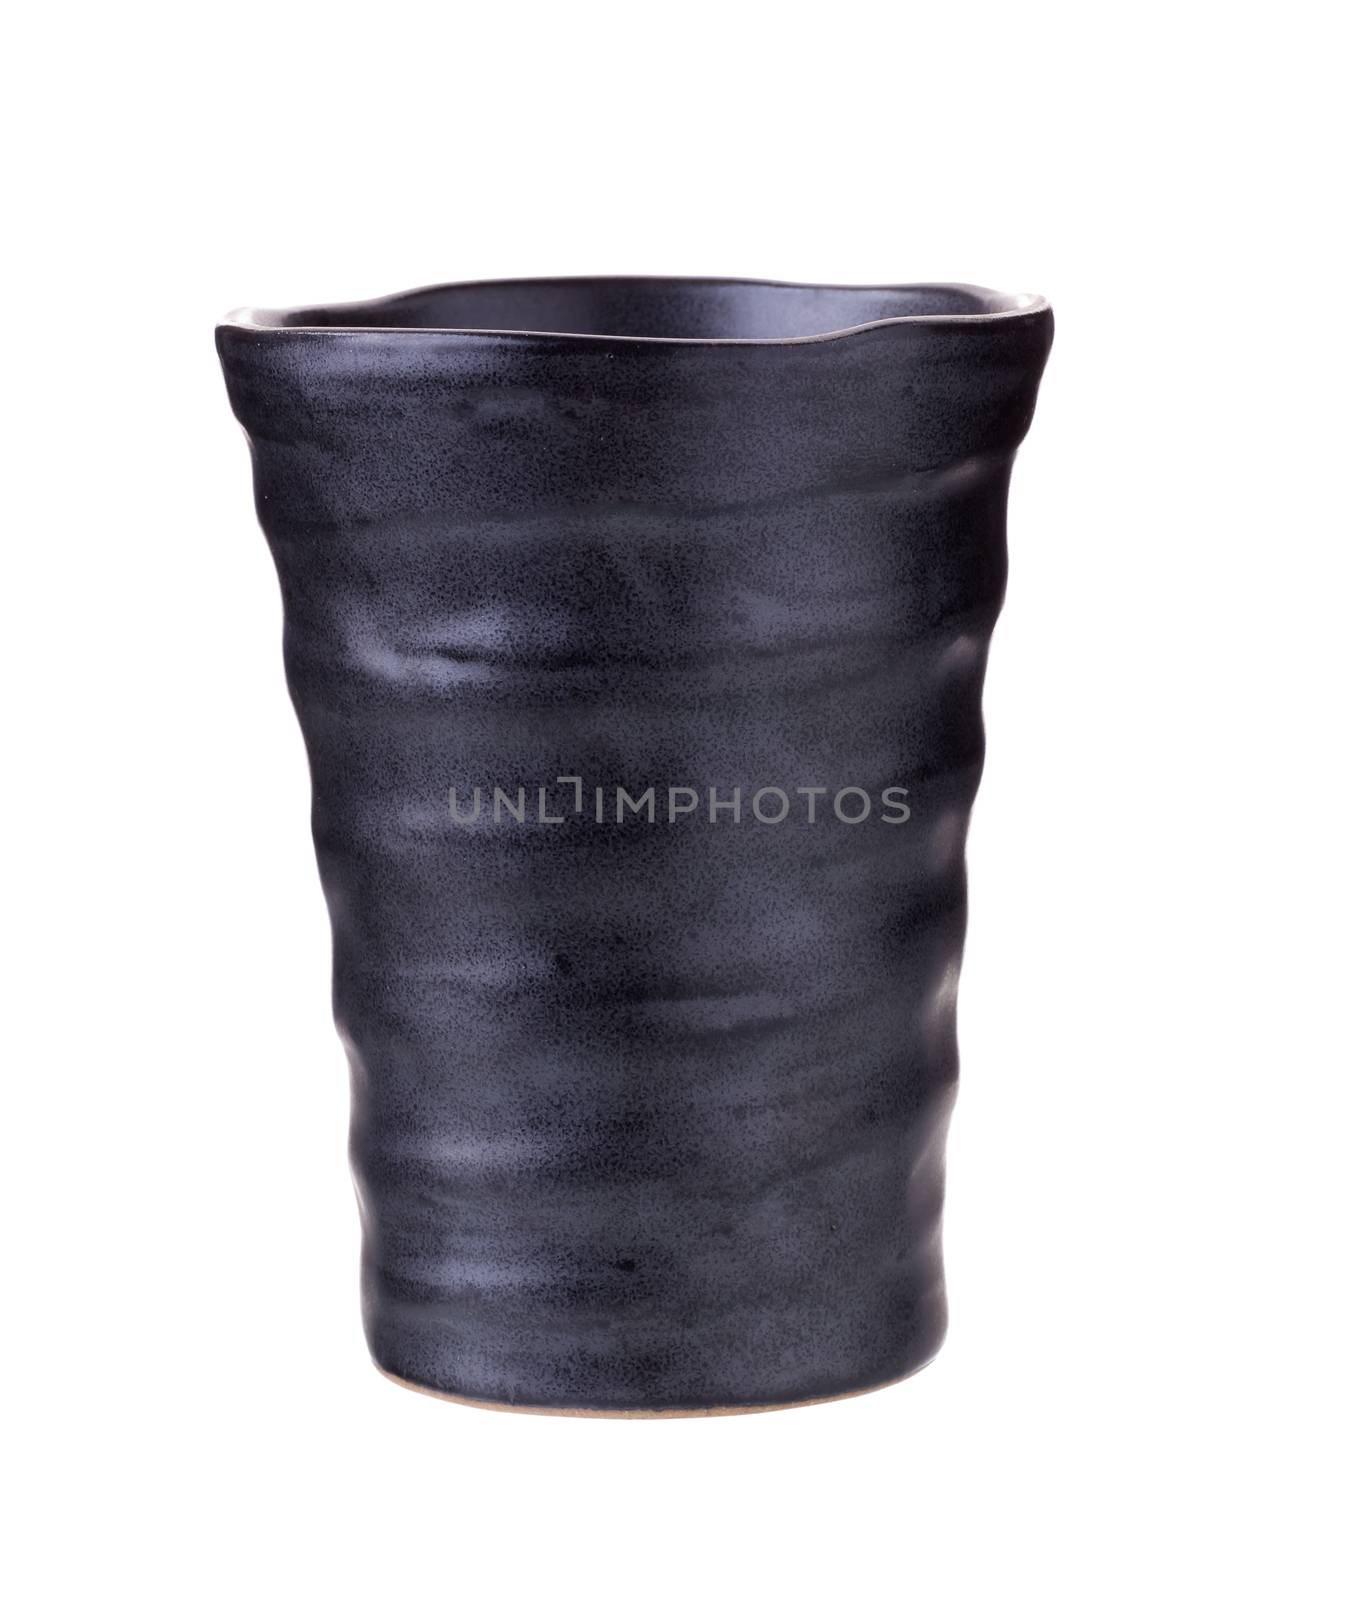 Glass ceramic black shape design wrinkly on white background by kaiskynet